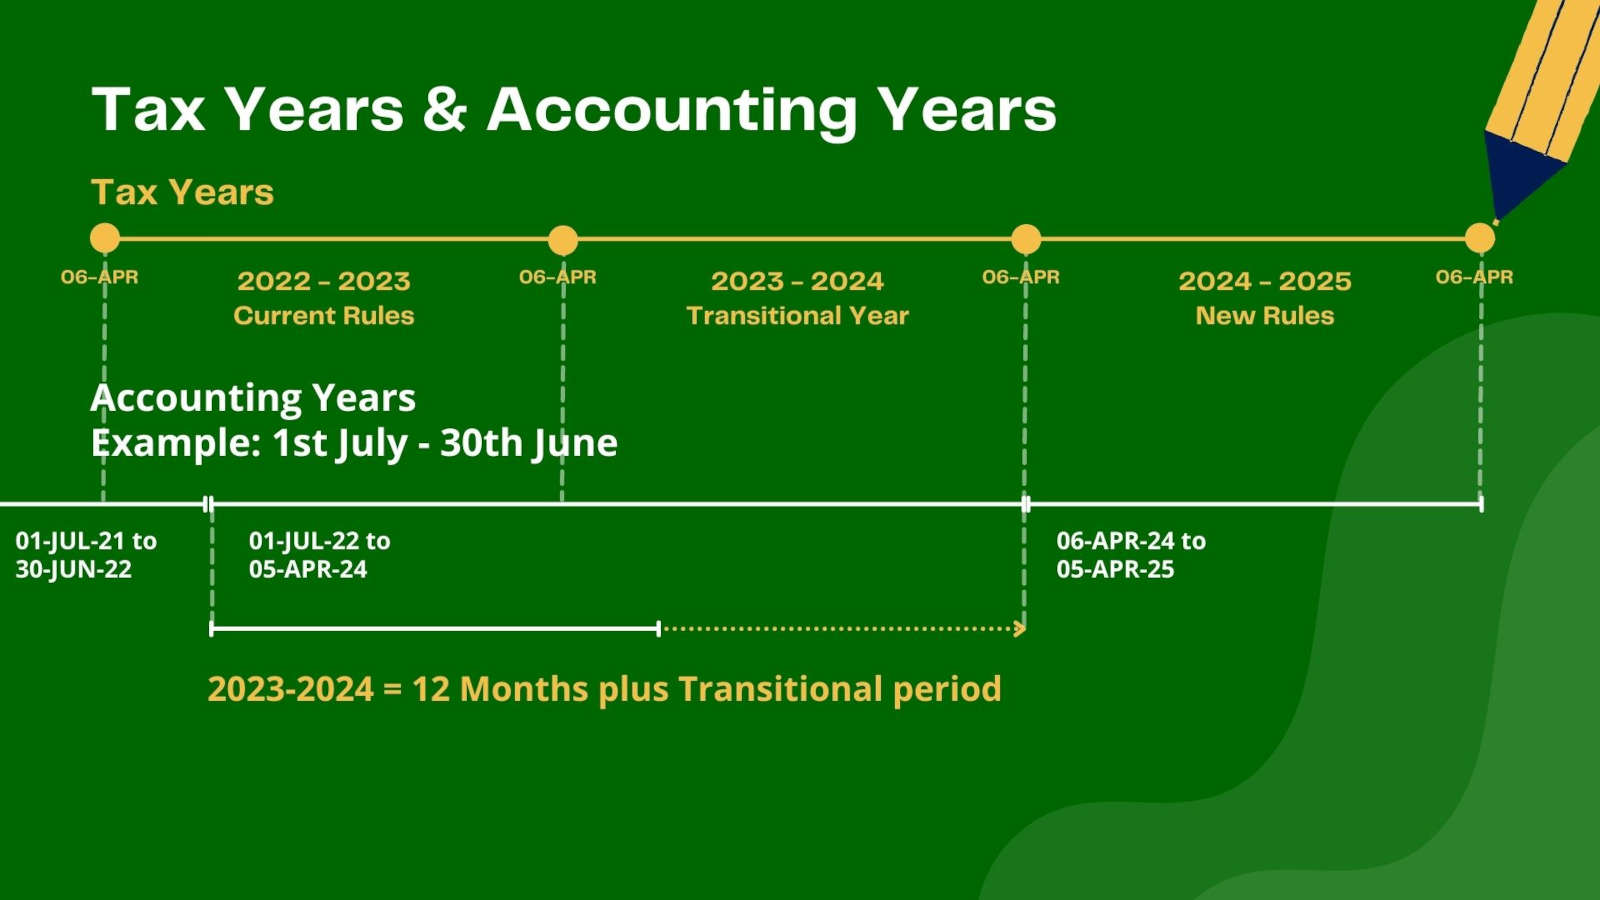 Tax Years and Accounting Years